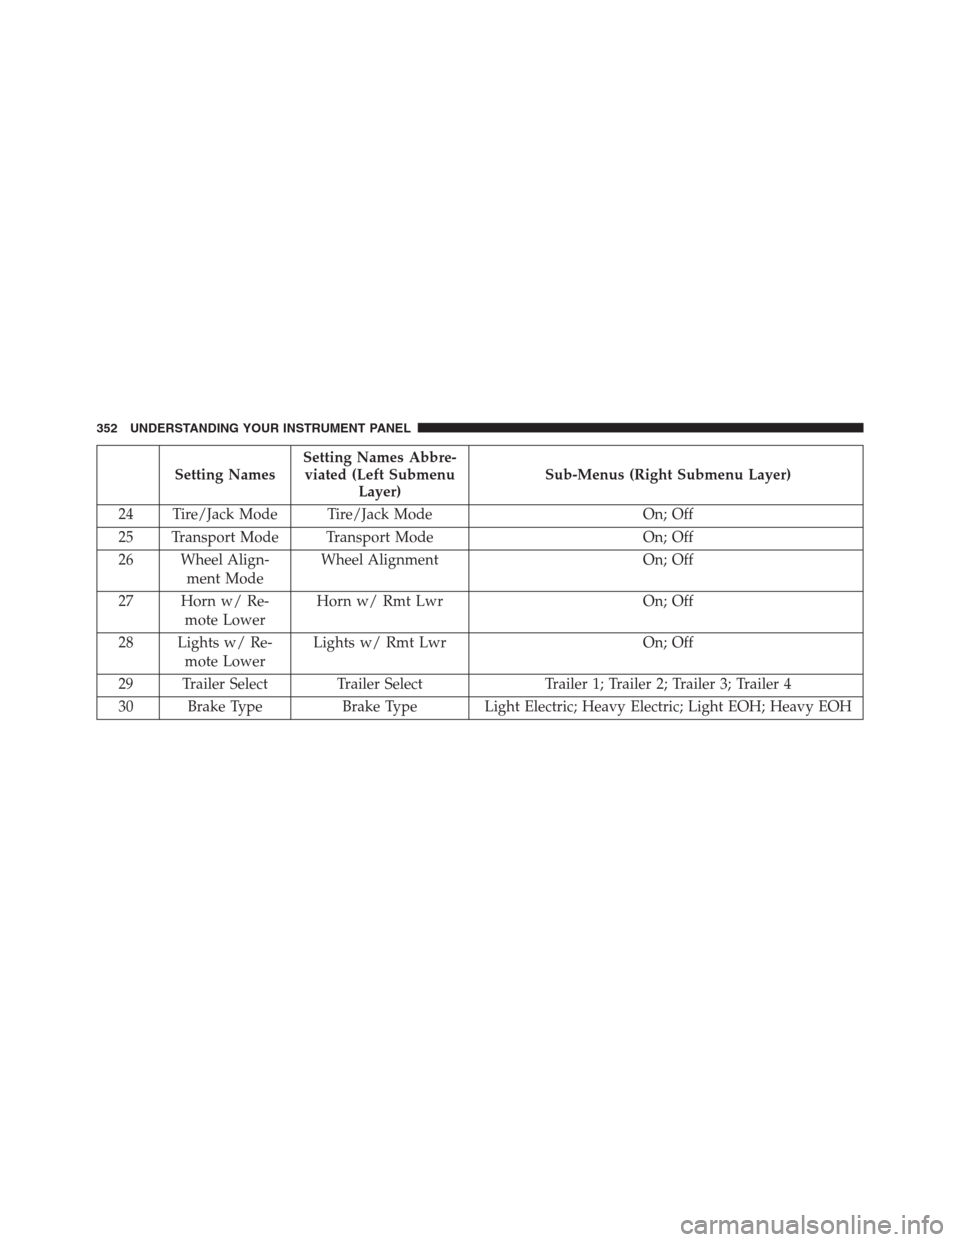 Ram 1500 2016  Owners Manual Setting NamesSetting Names Abbre-
viated (Left Submenu
Layer)Sub-Menus (Right Submenu Layer)
24 Tire/Jack Mode Tire/Jack Mode On; Off
25 Transport Mode Transport Mode On; Off
26 Wheel Align-
ment Mode